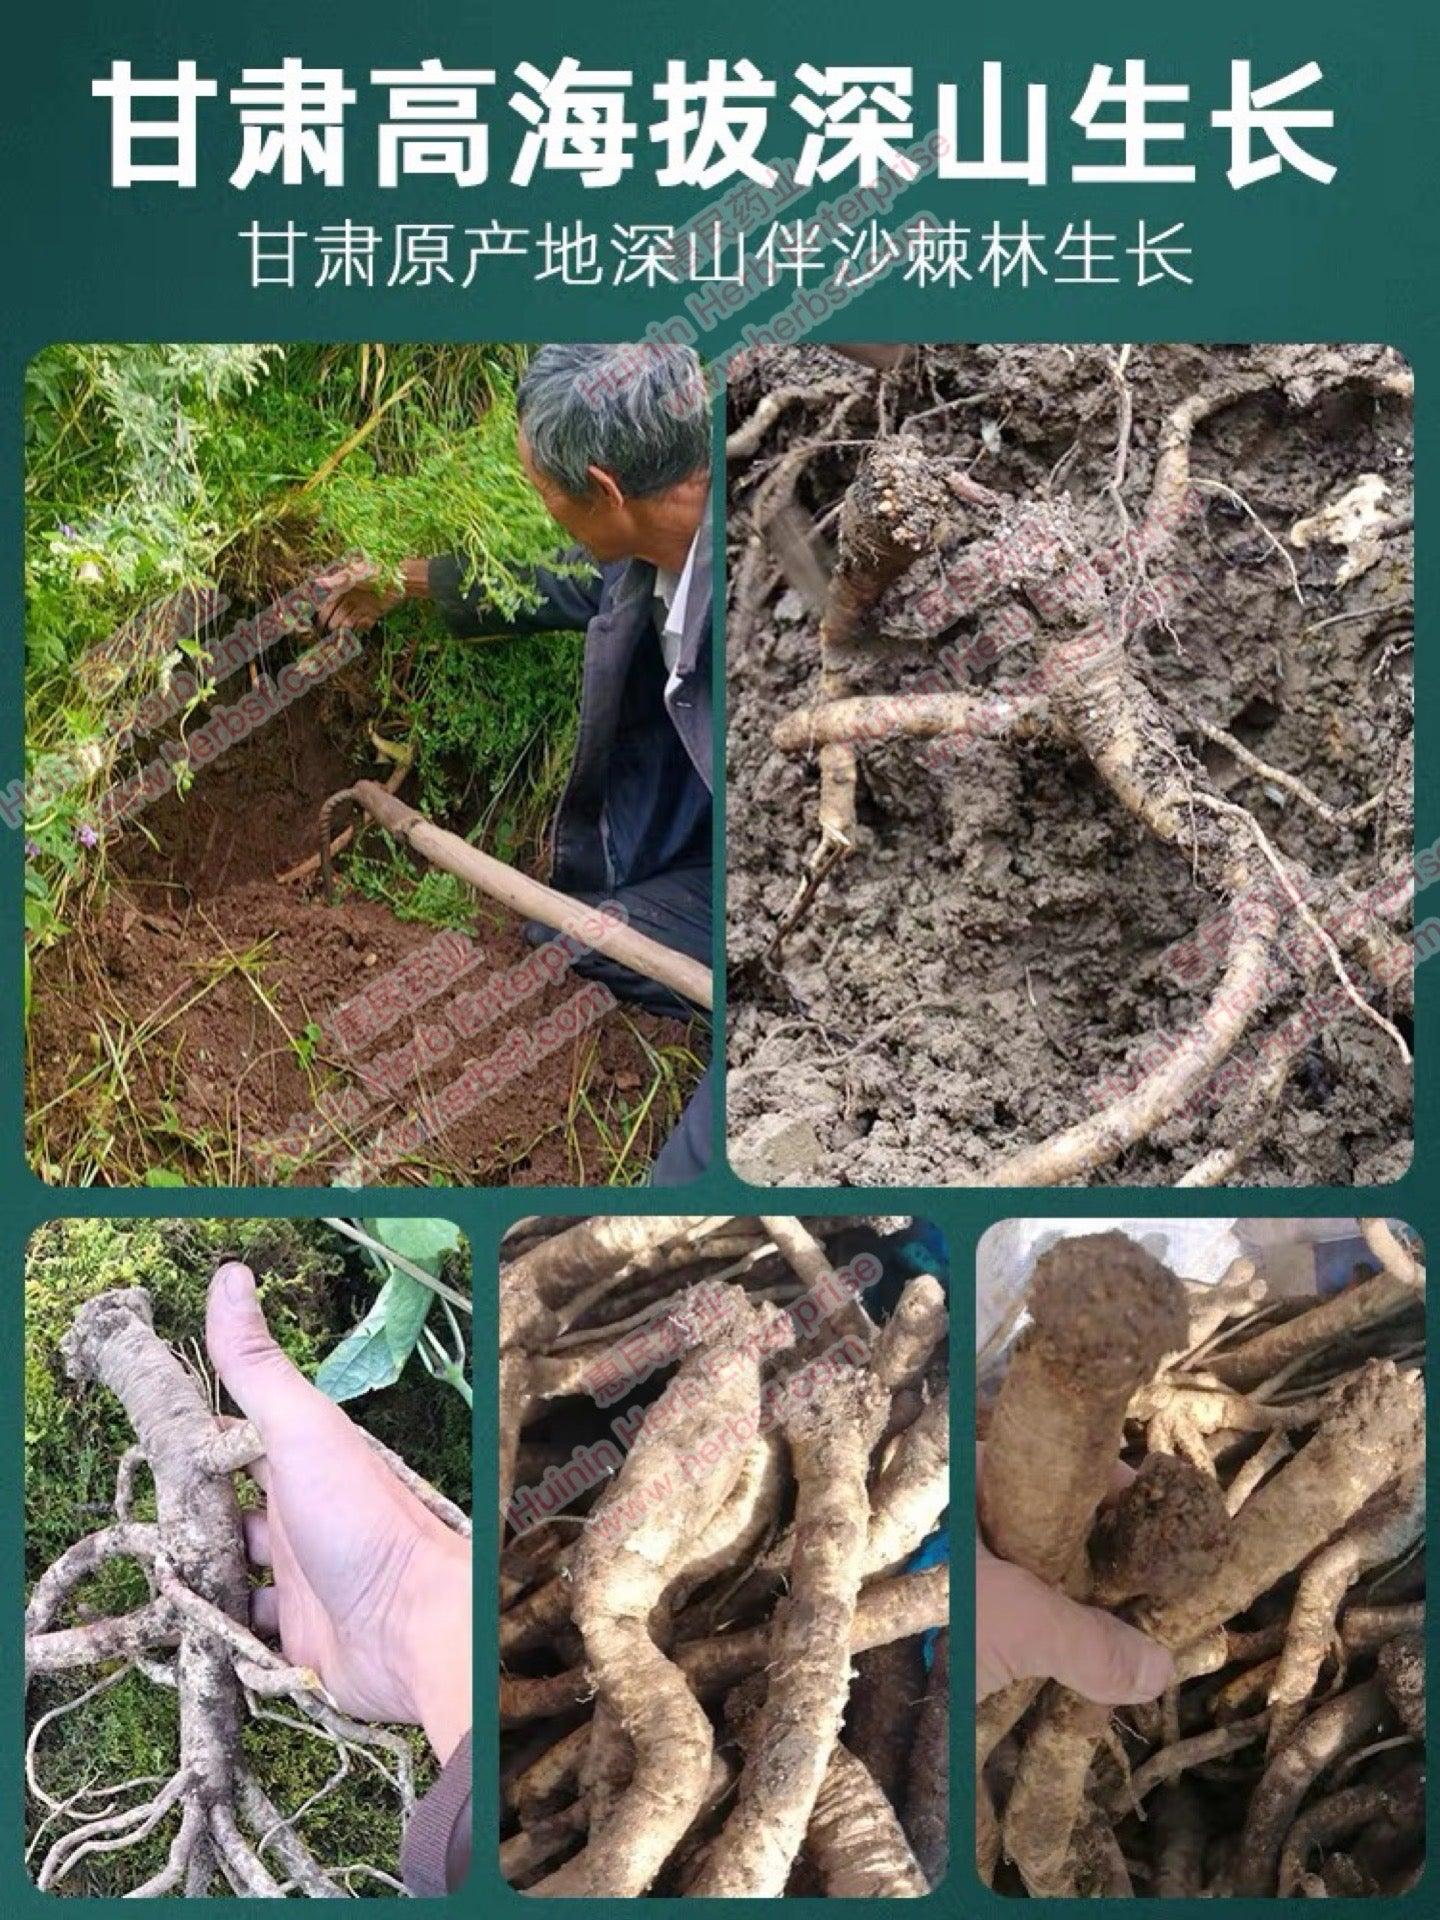 Dang Shen (Pilose Asiabell Root) 4oz - Huimin Herb Online, LLC